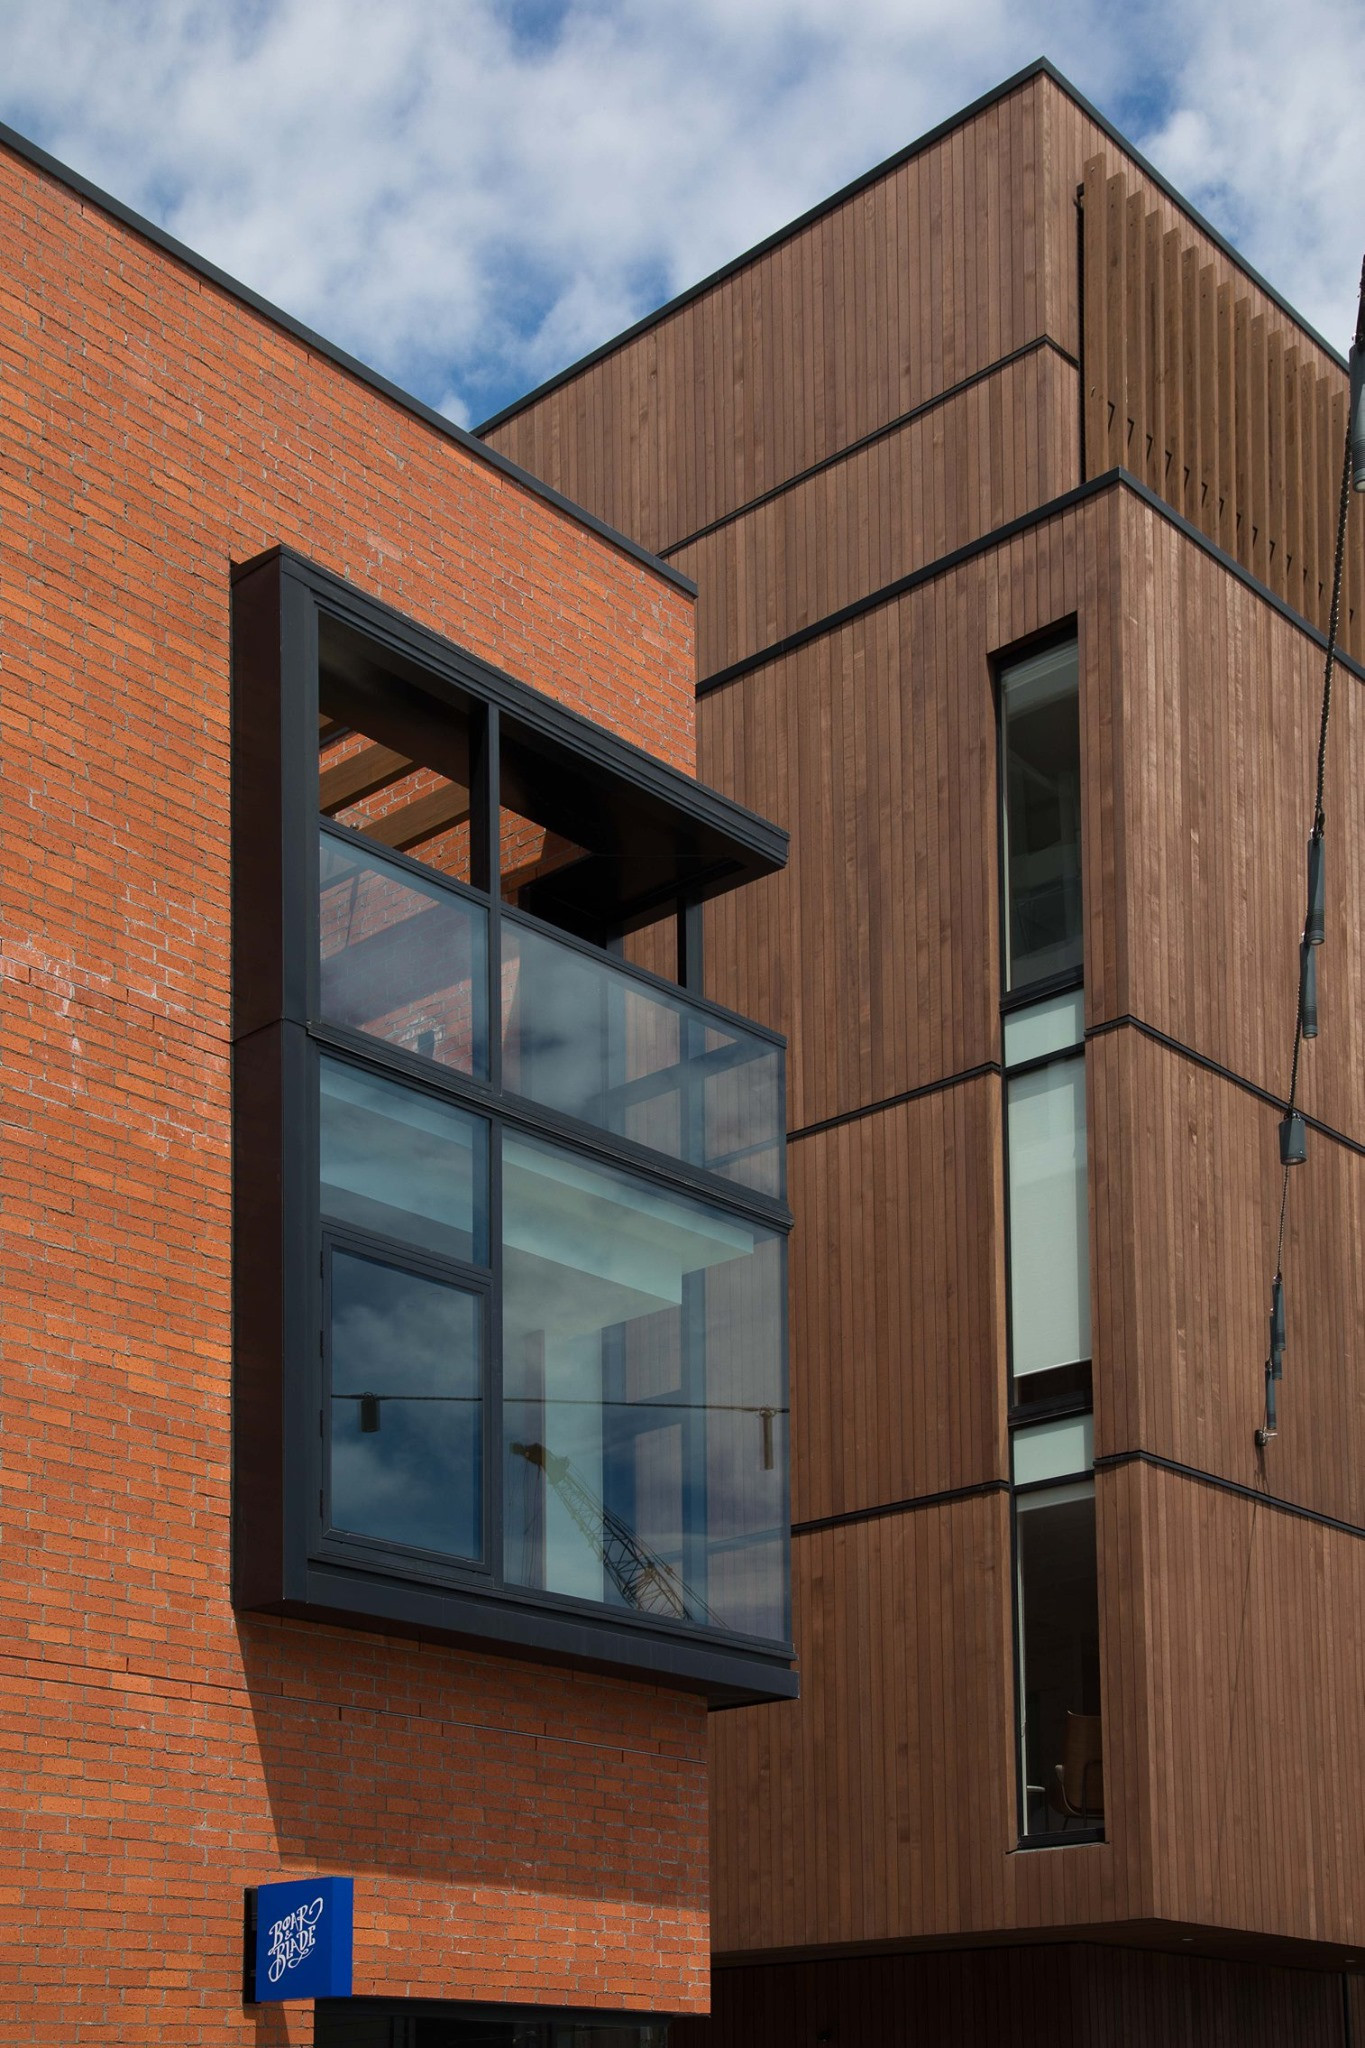 Stylish urban apartments with red brick walls and sleek black-framed windows